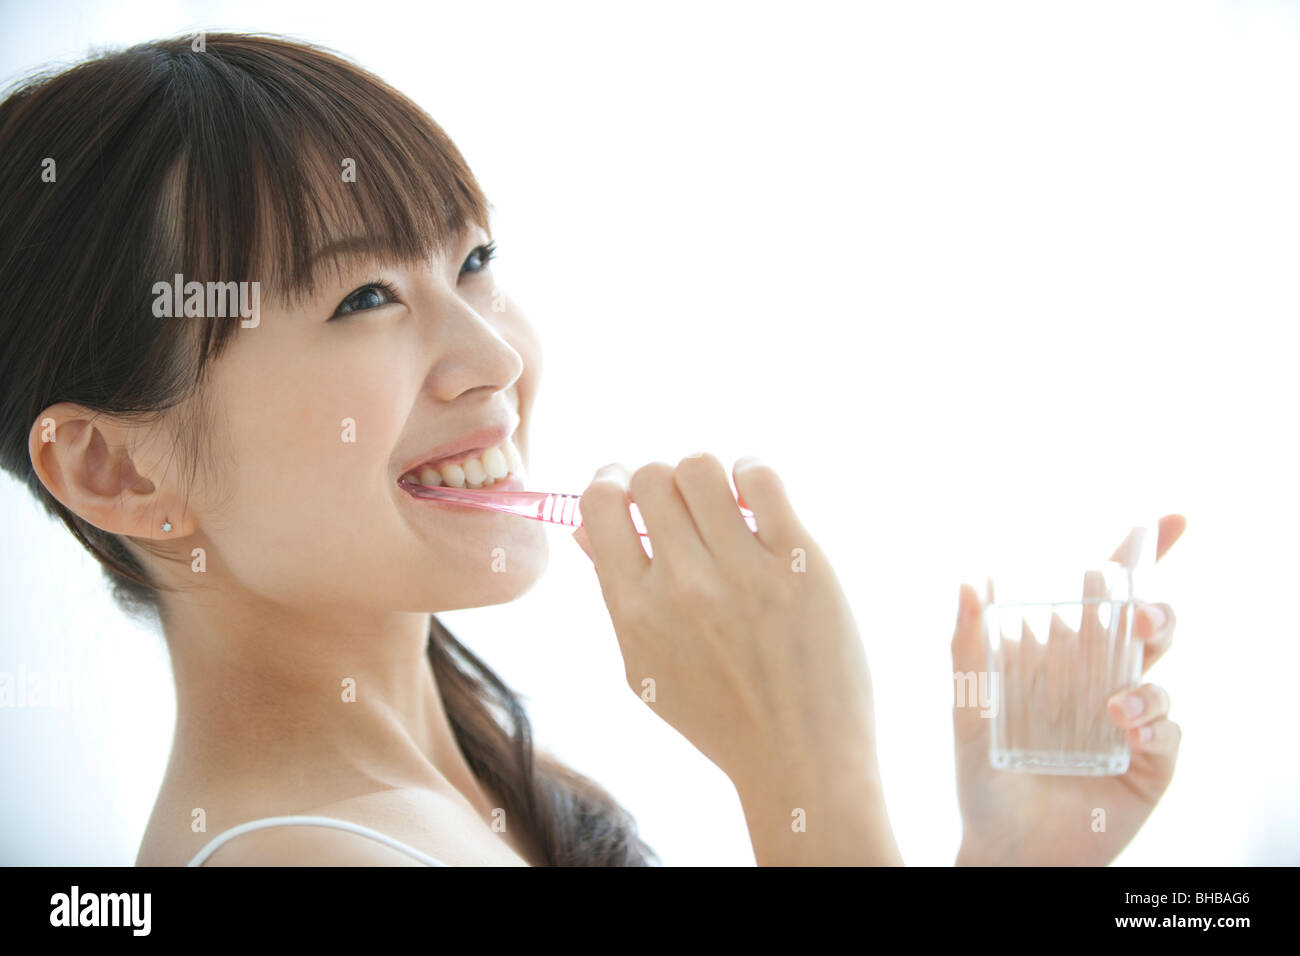 Japan, Osaka Prefecture, Woman brushing teeth, smiling, close-up Stock Photo